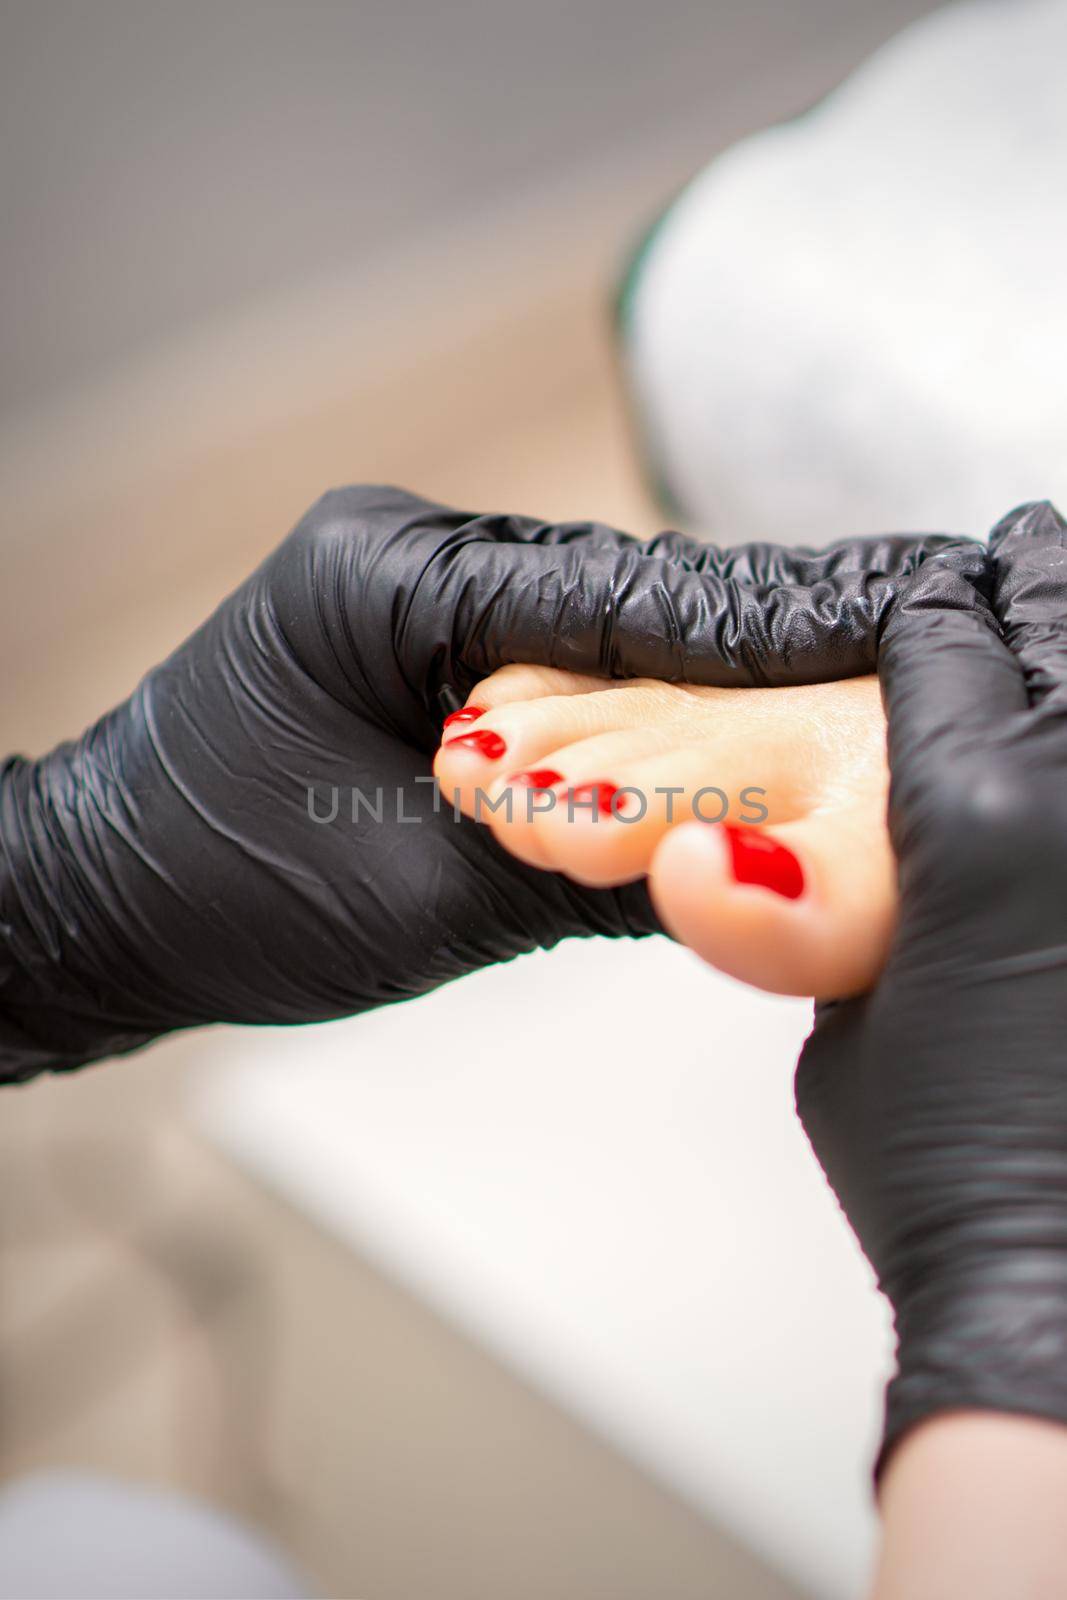 Foot massage with moisturizing and peeling cream by pedicurist hands wearing black gloves, close up. by okskukuruza